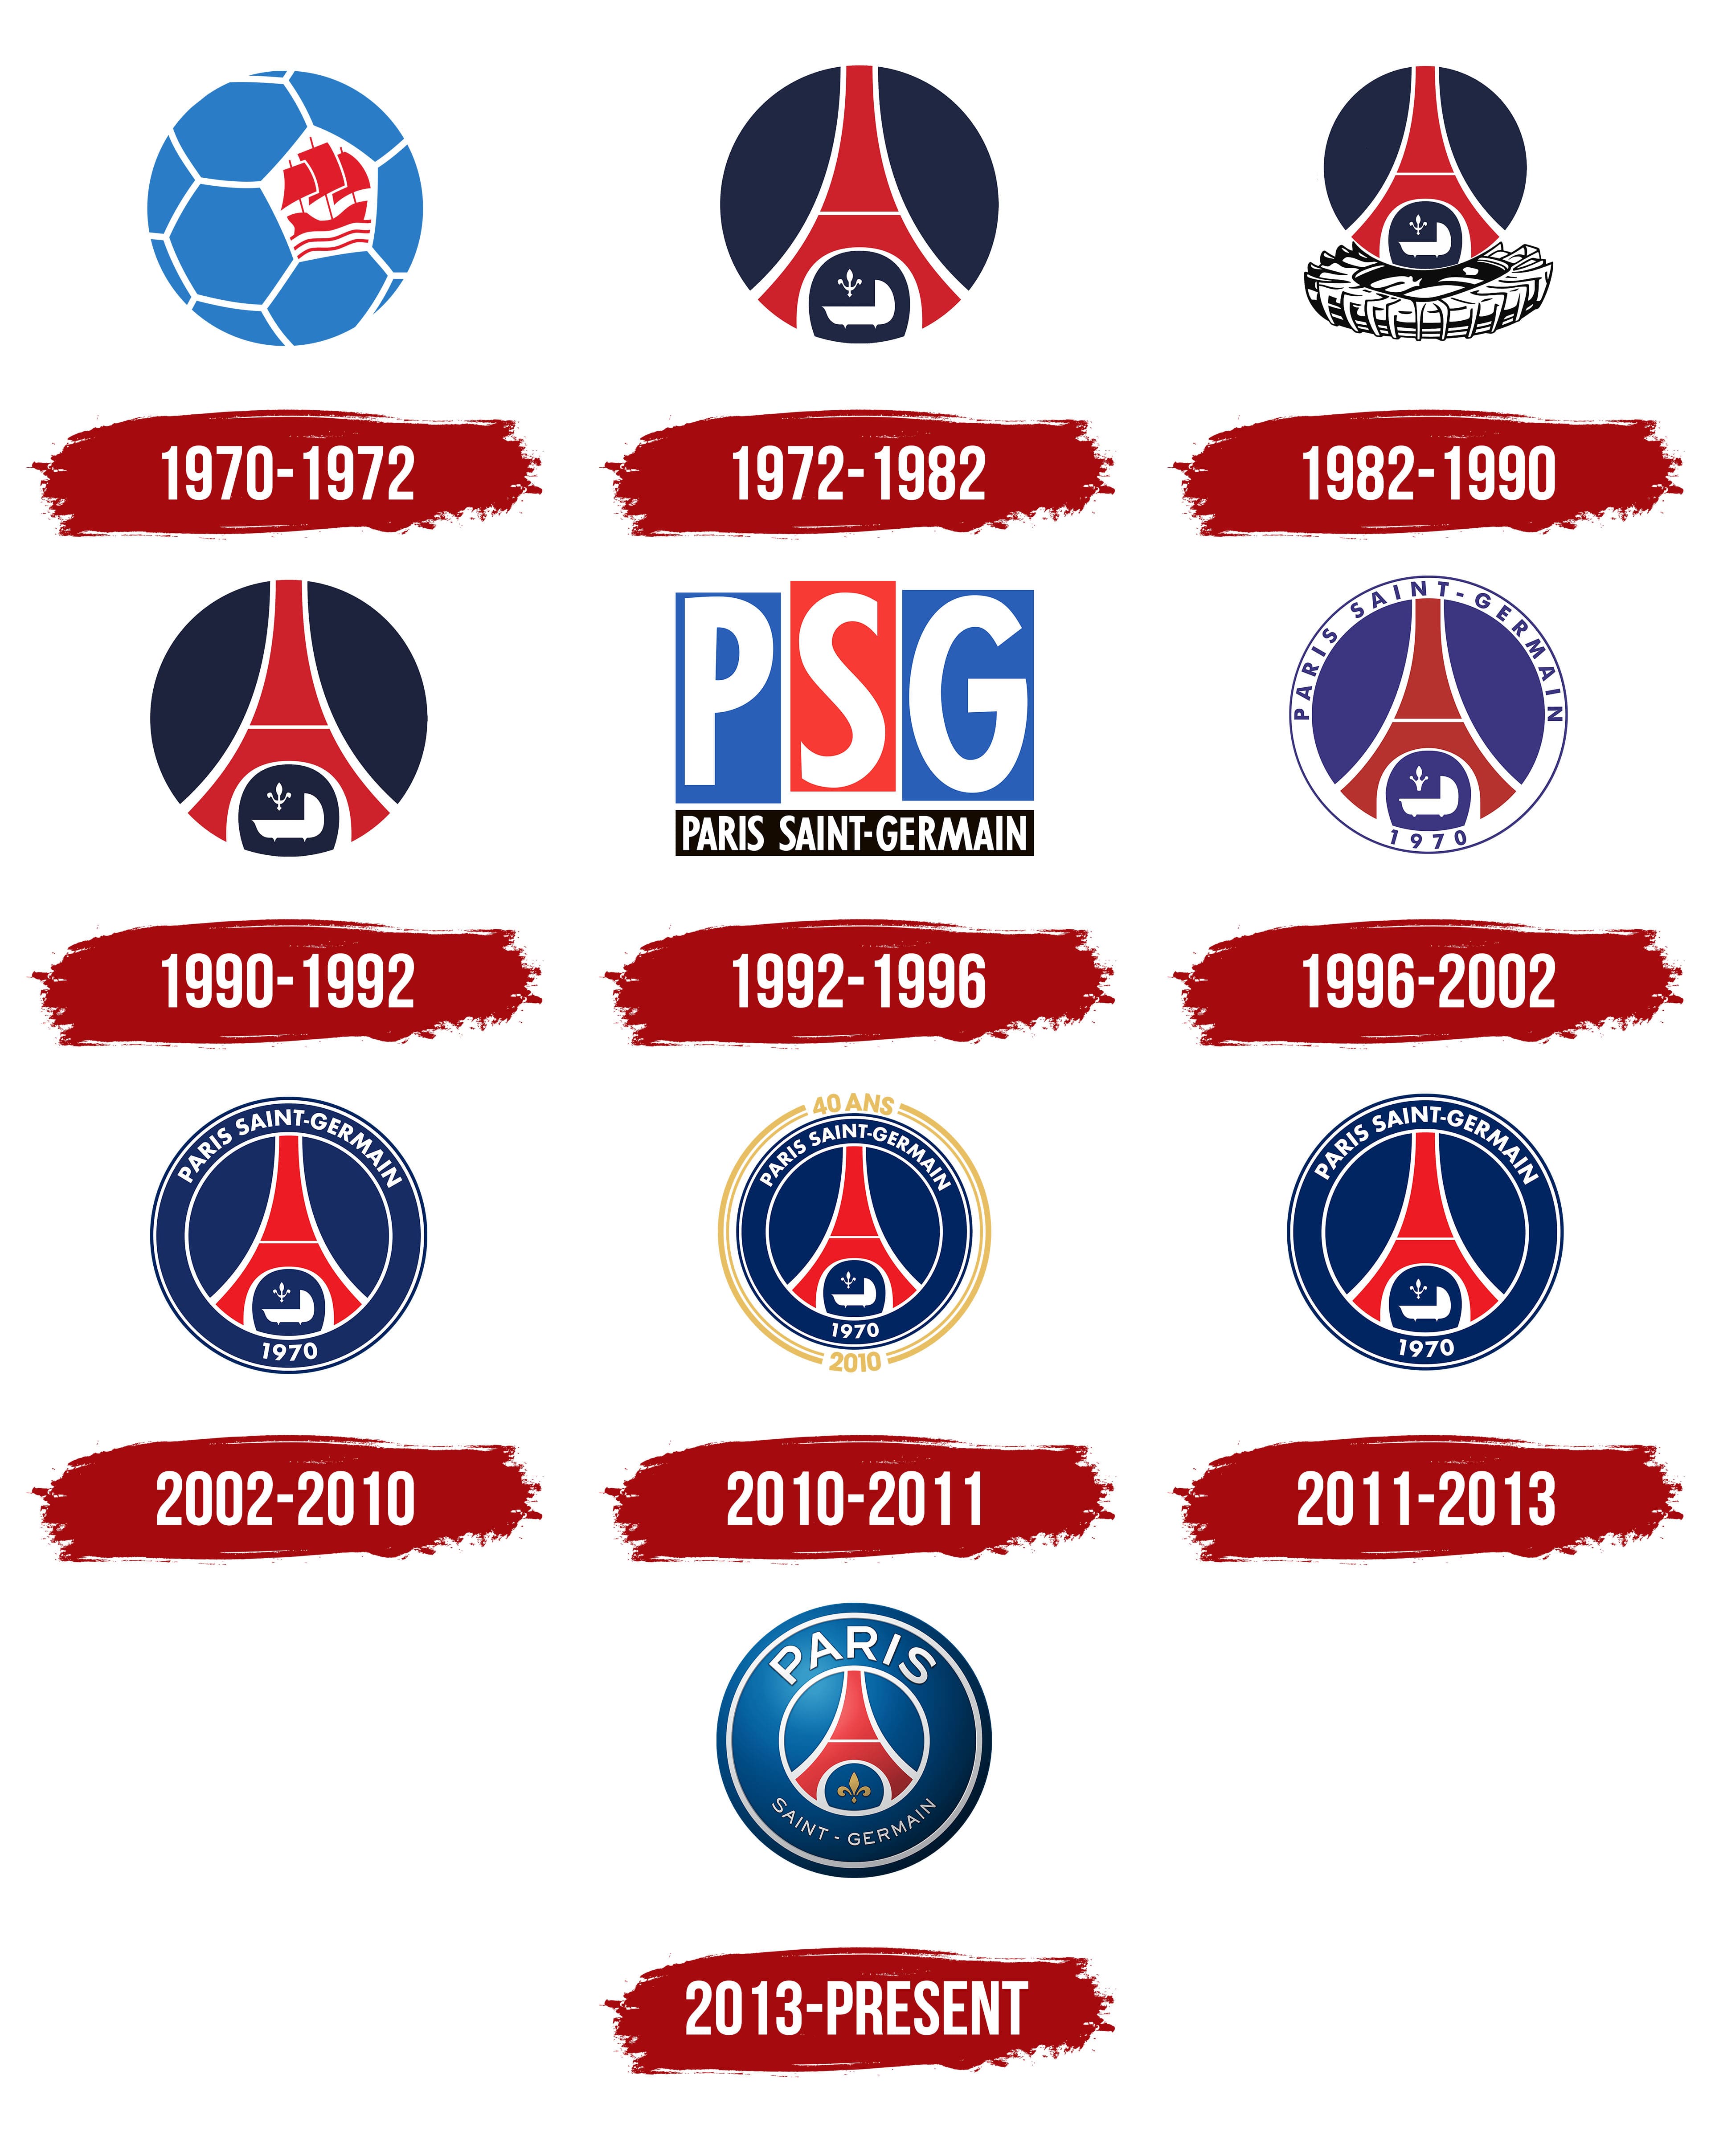 History of Paris Saint-Germain F.C. - Wikipedia